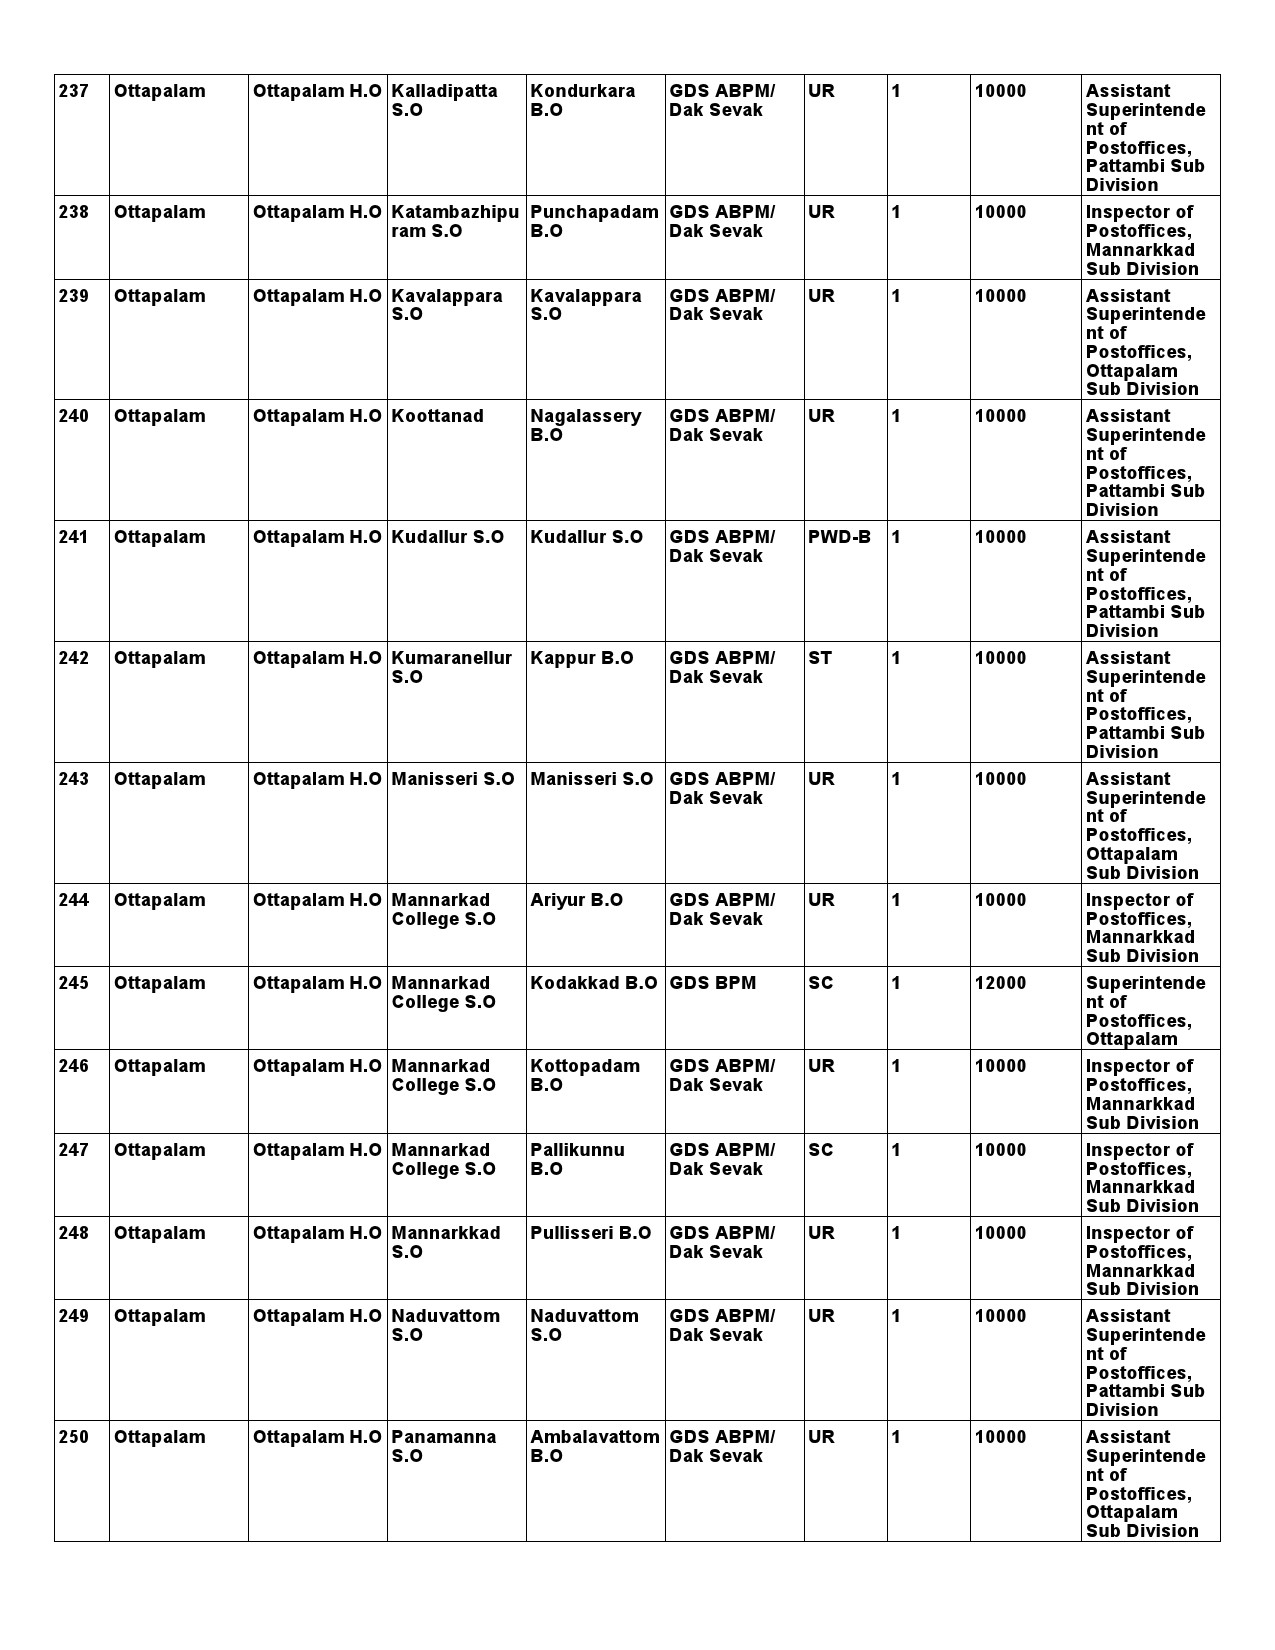 Kerala Postal Circle GDS Recruitment 2021 notification - Notification Image 33